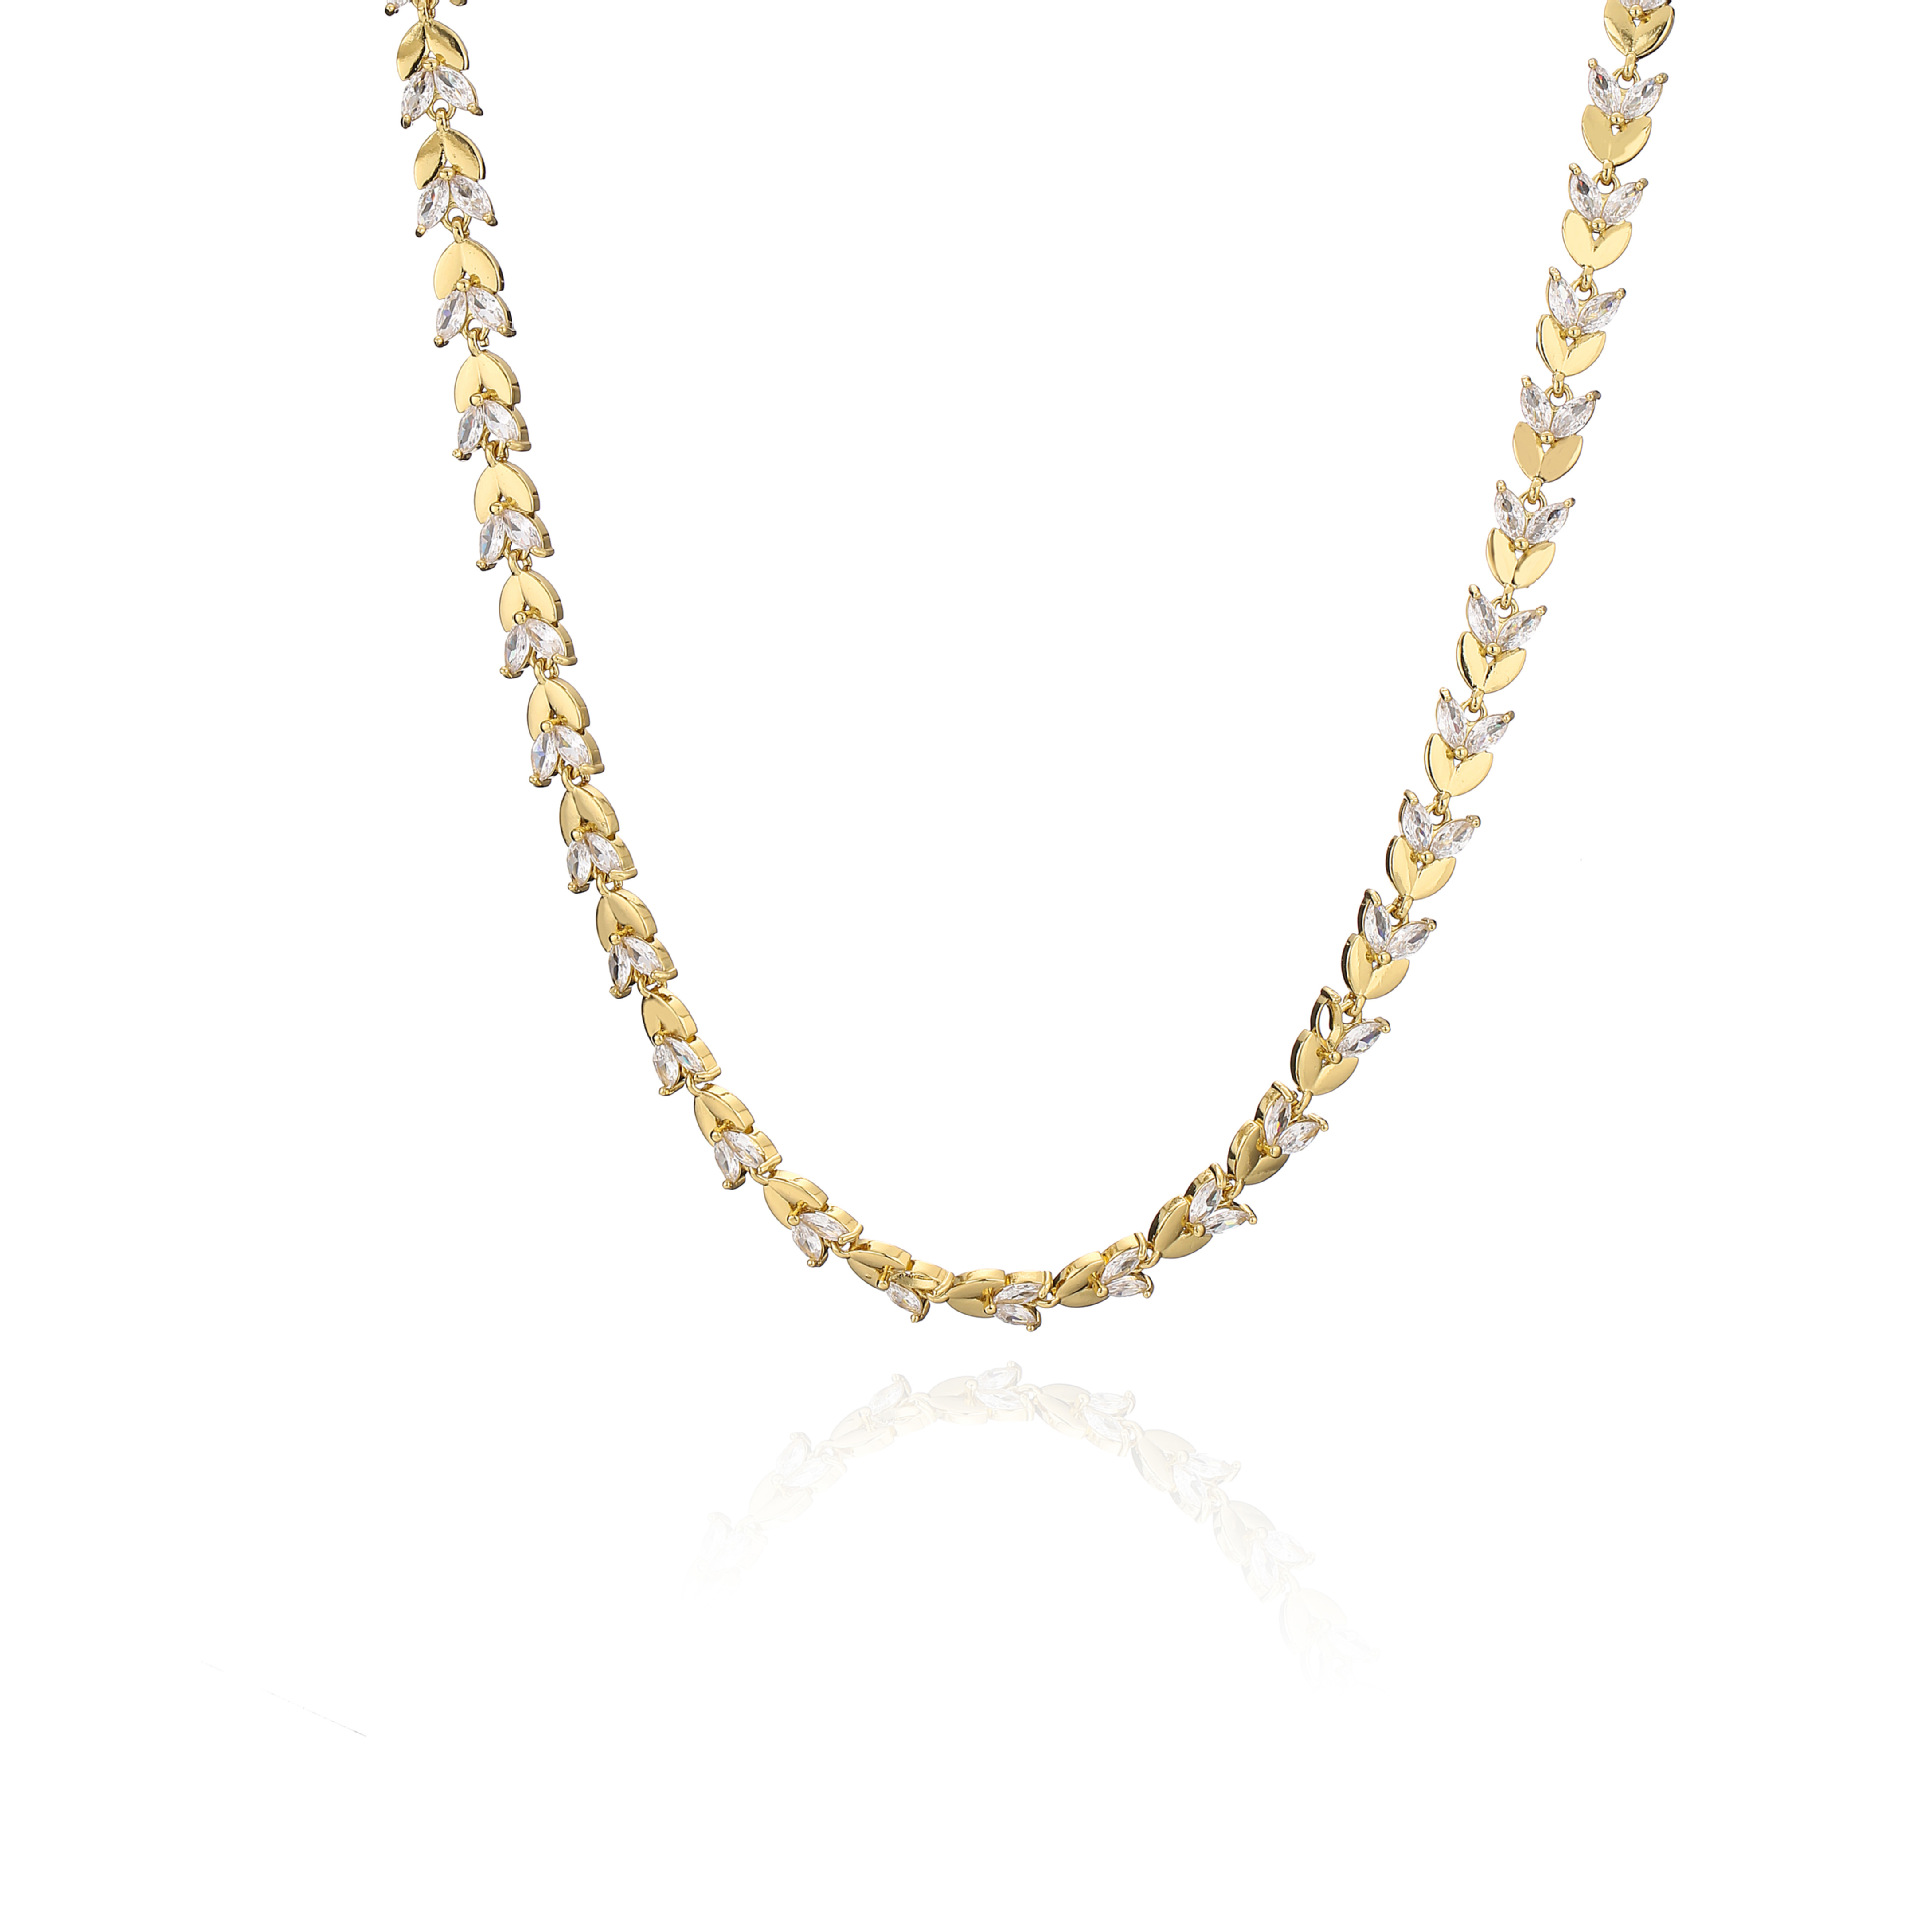 1:Gold Necklace 1 piece